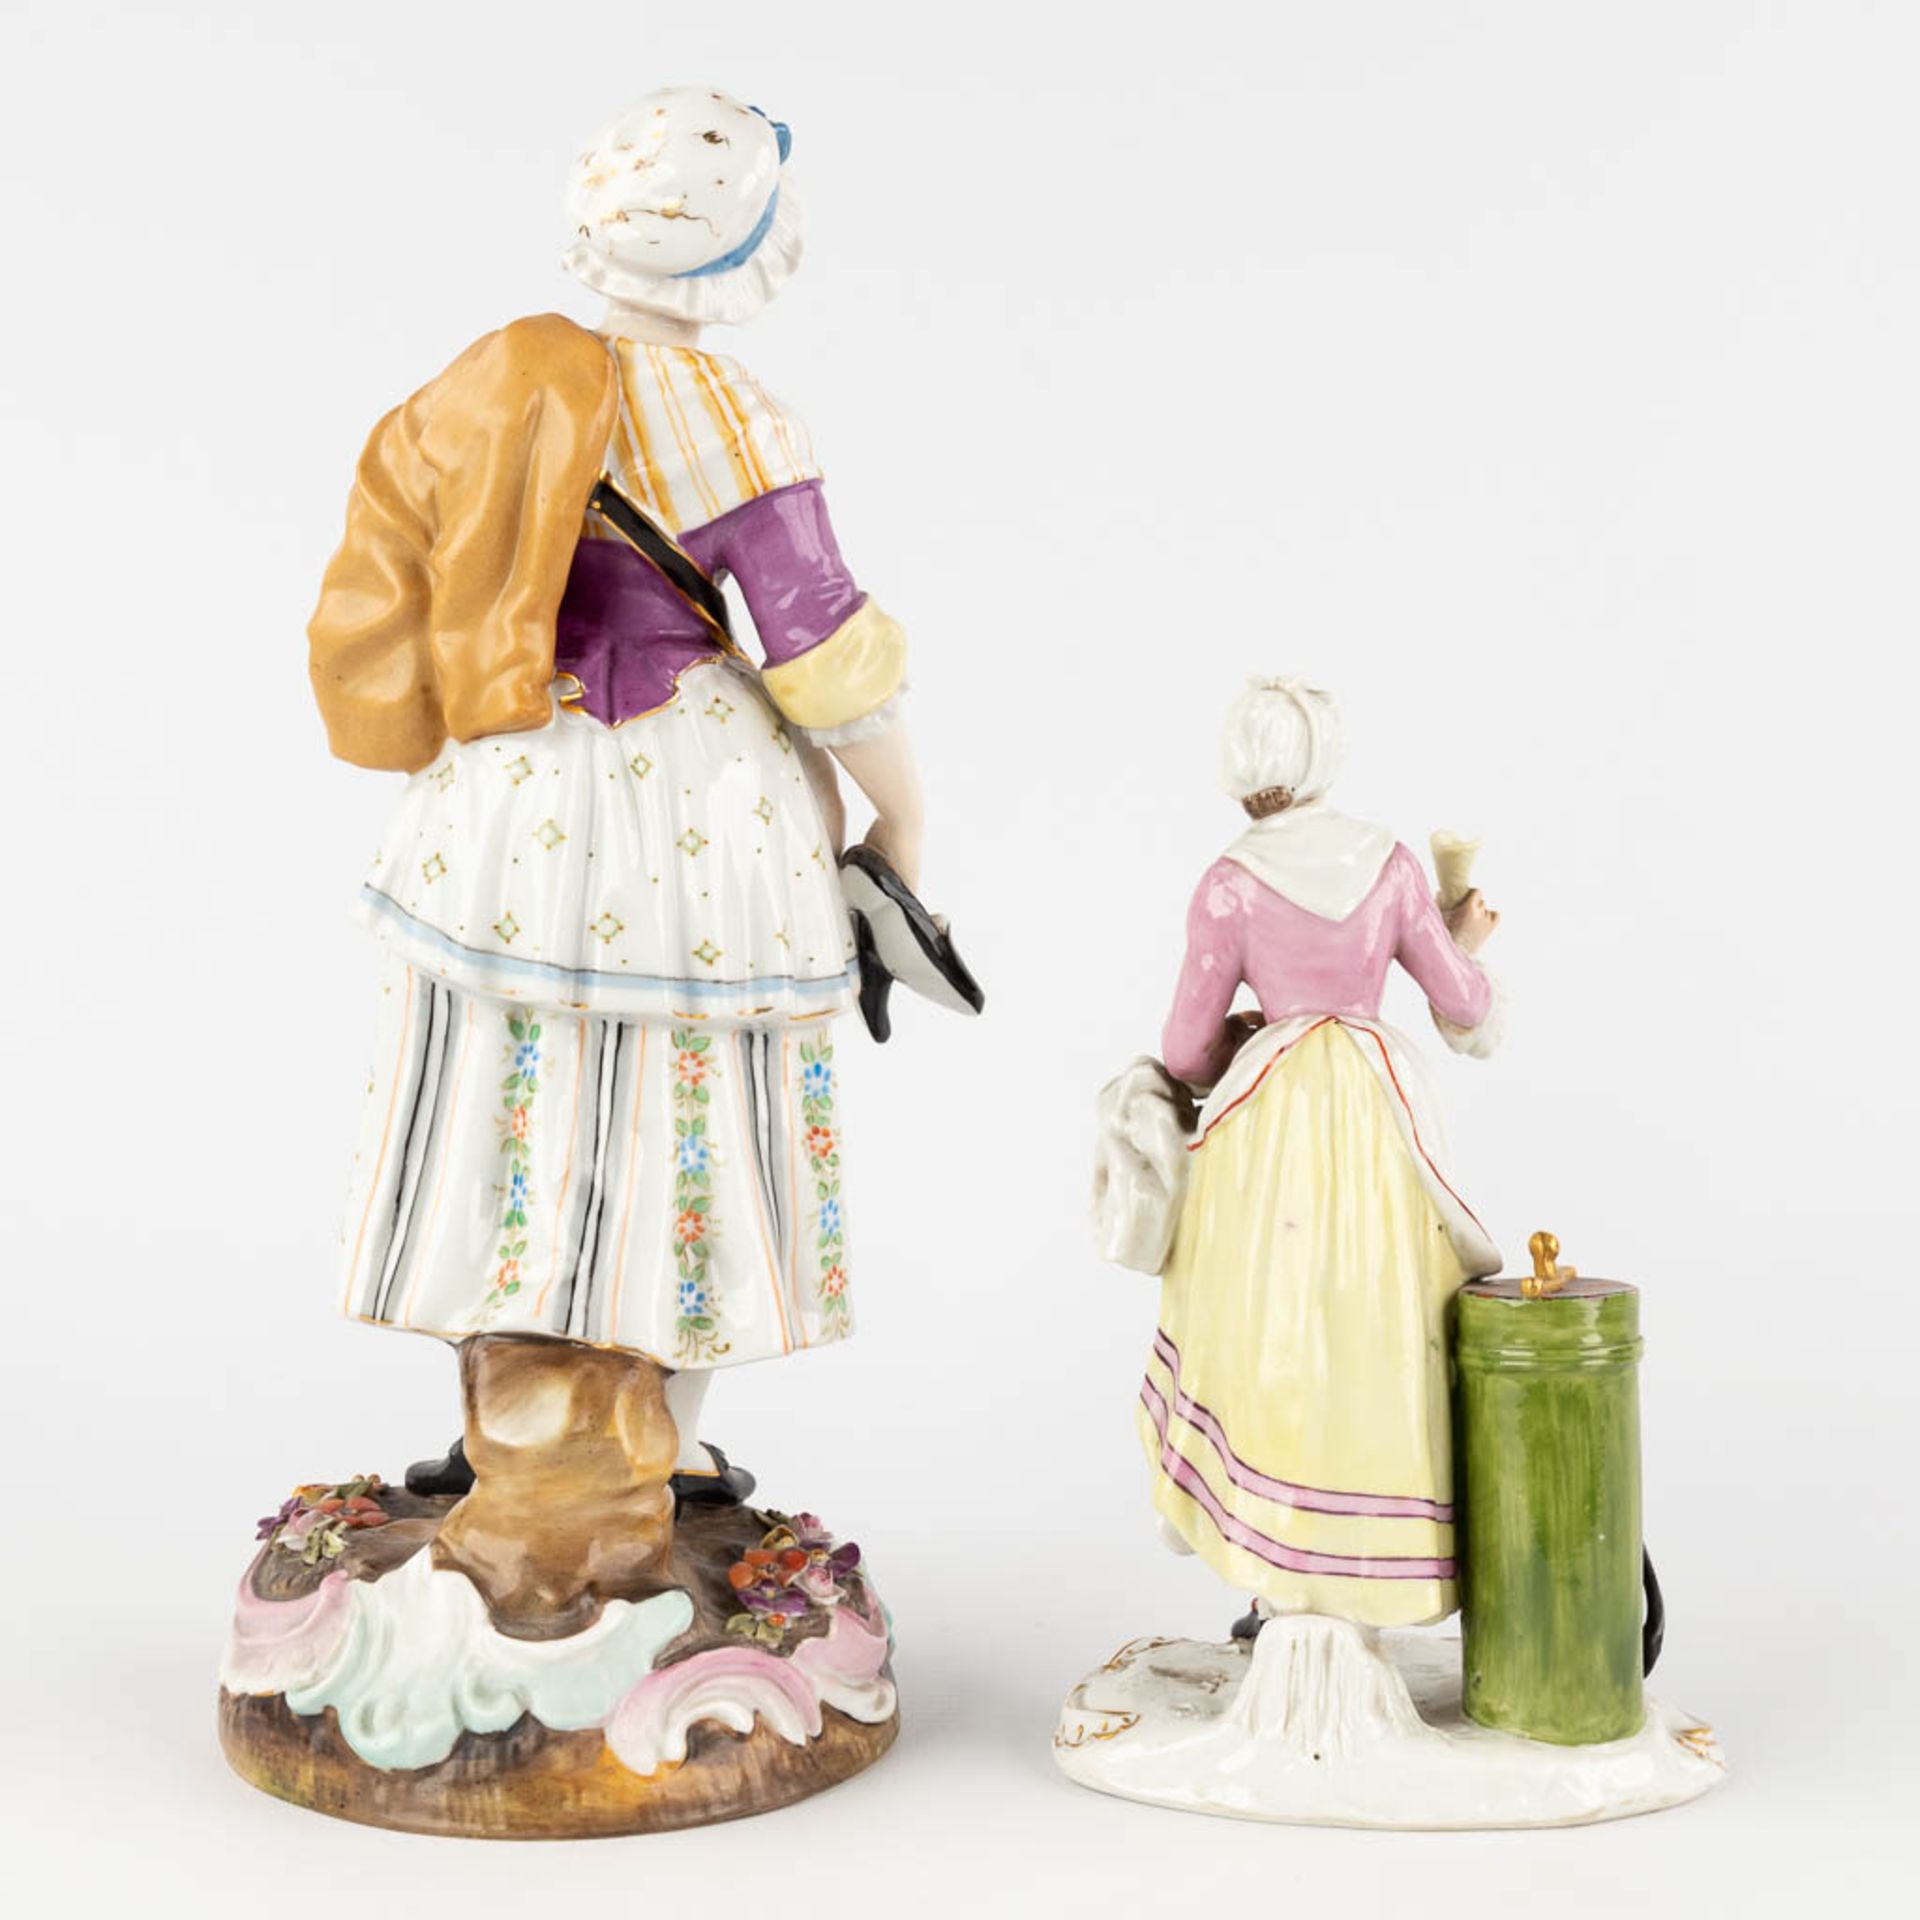 Milan and Ludwigsburg, 2 polychrome porcelain figurines. 19th C. (D:11 x W:12 x H:27 cm) - Bild 4 aus 12